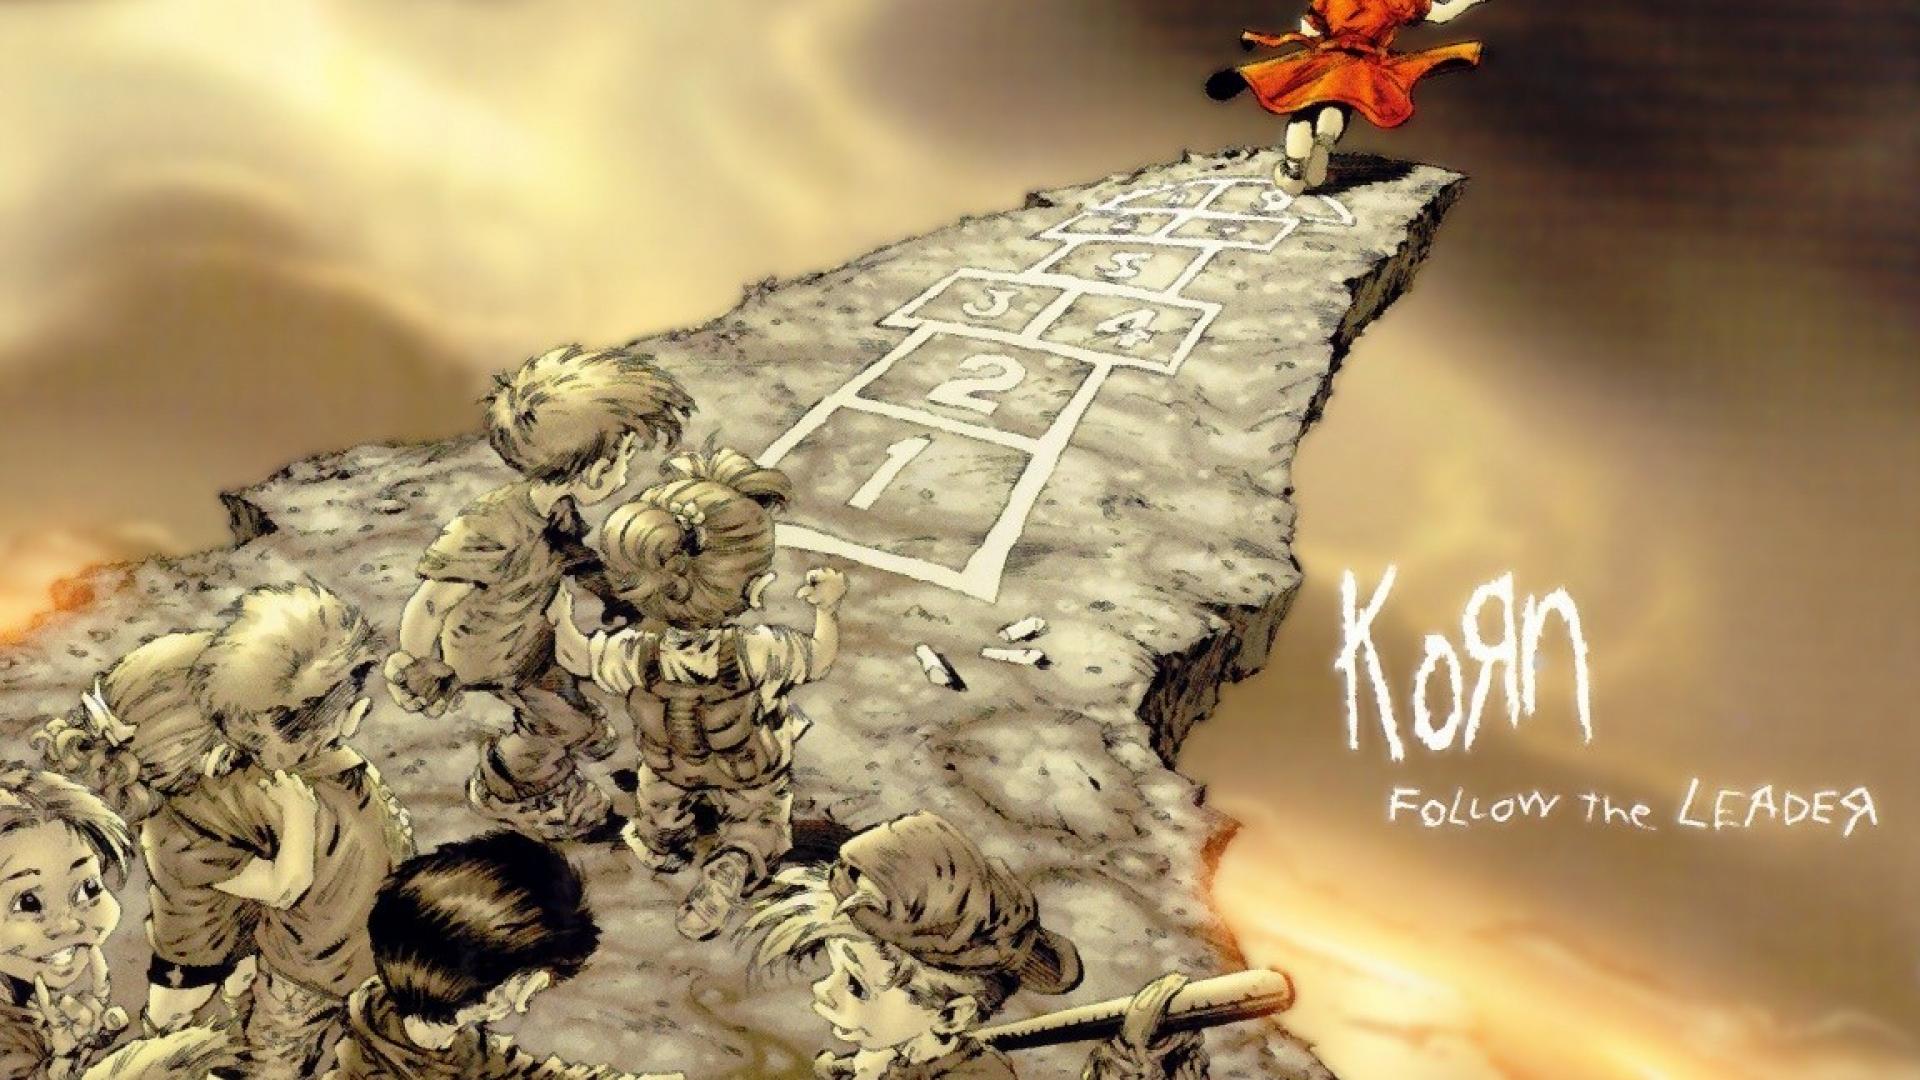 Korn album covers wallpaper